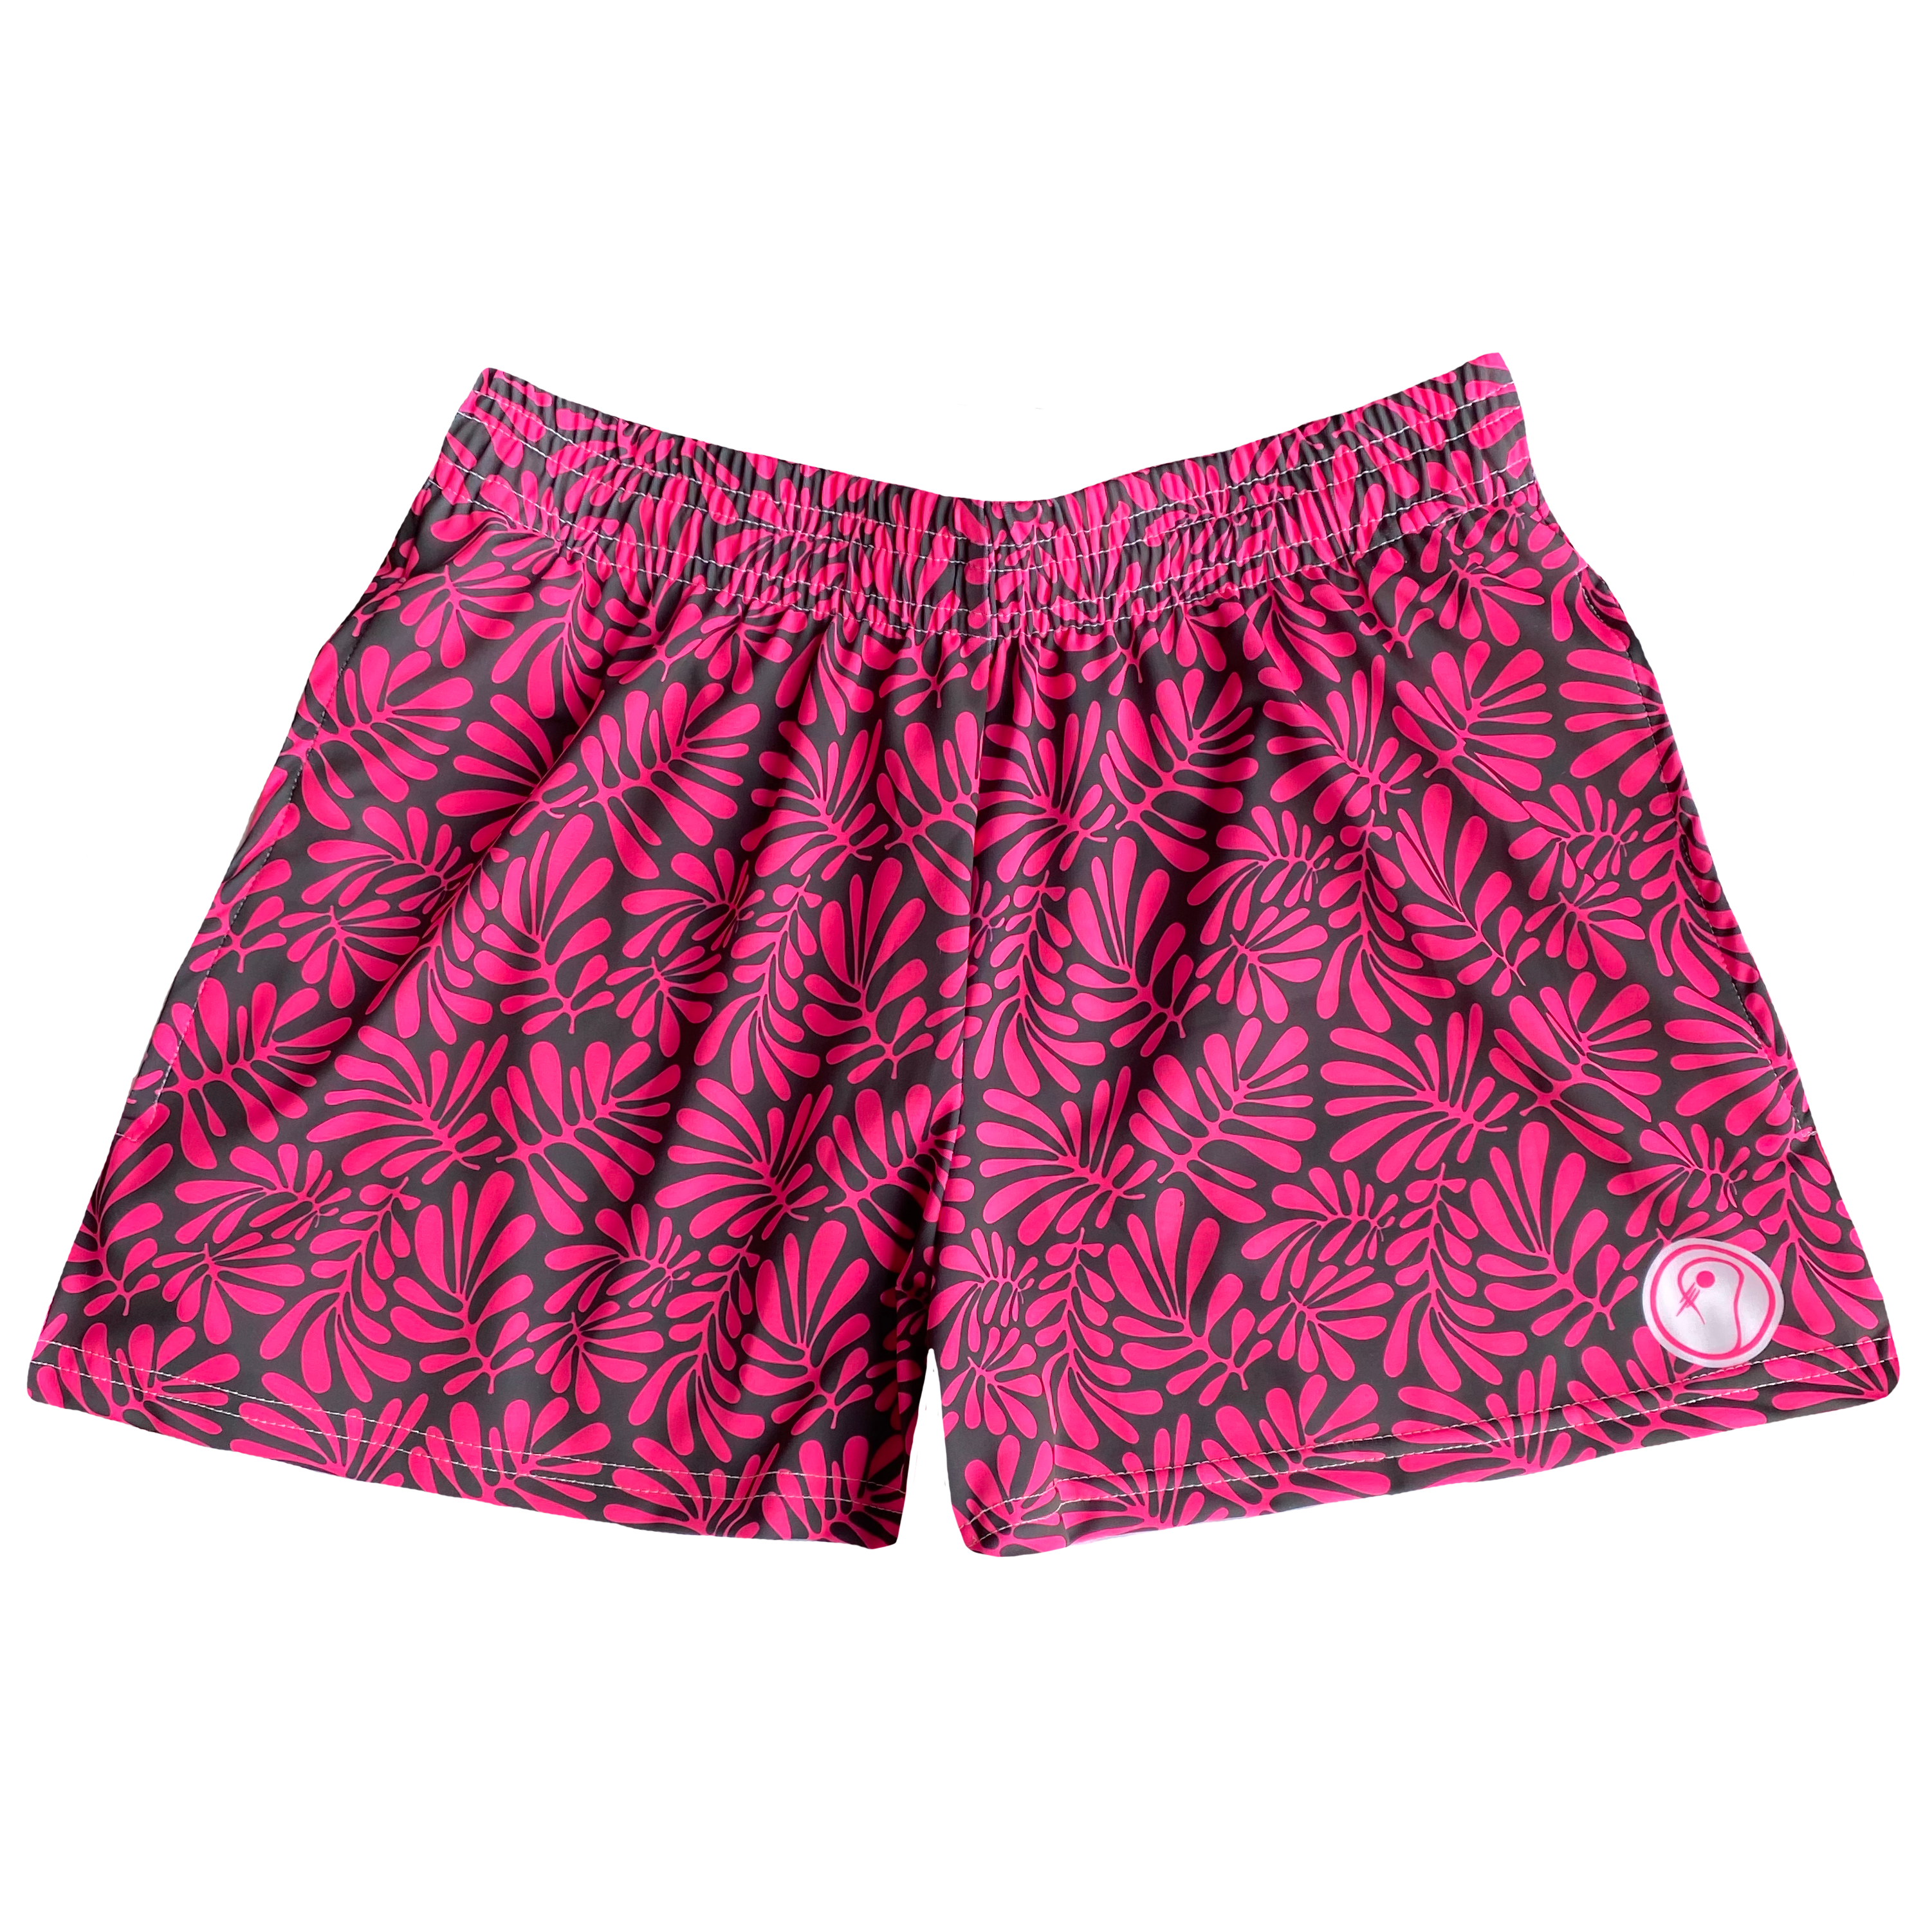 Womens Tropical Lacrosse Shorts - Black / Pink